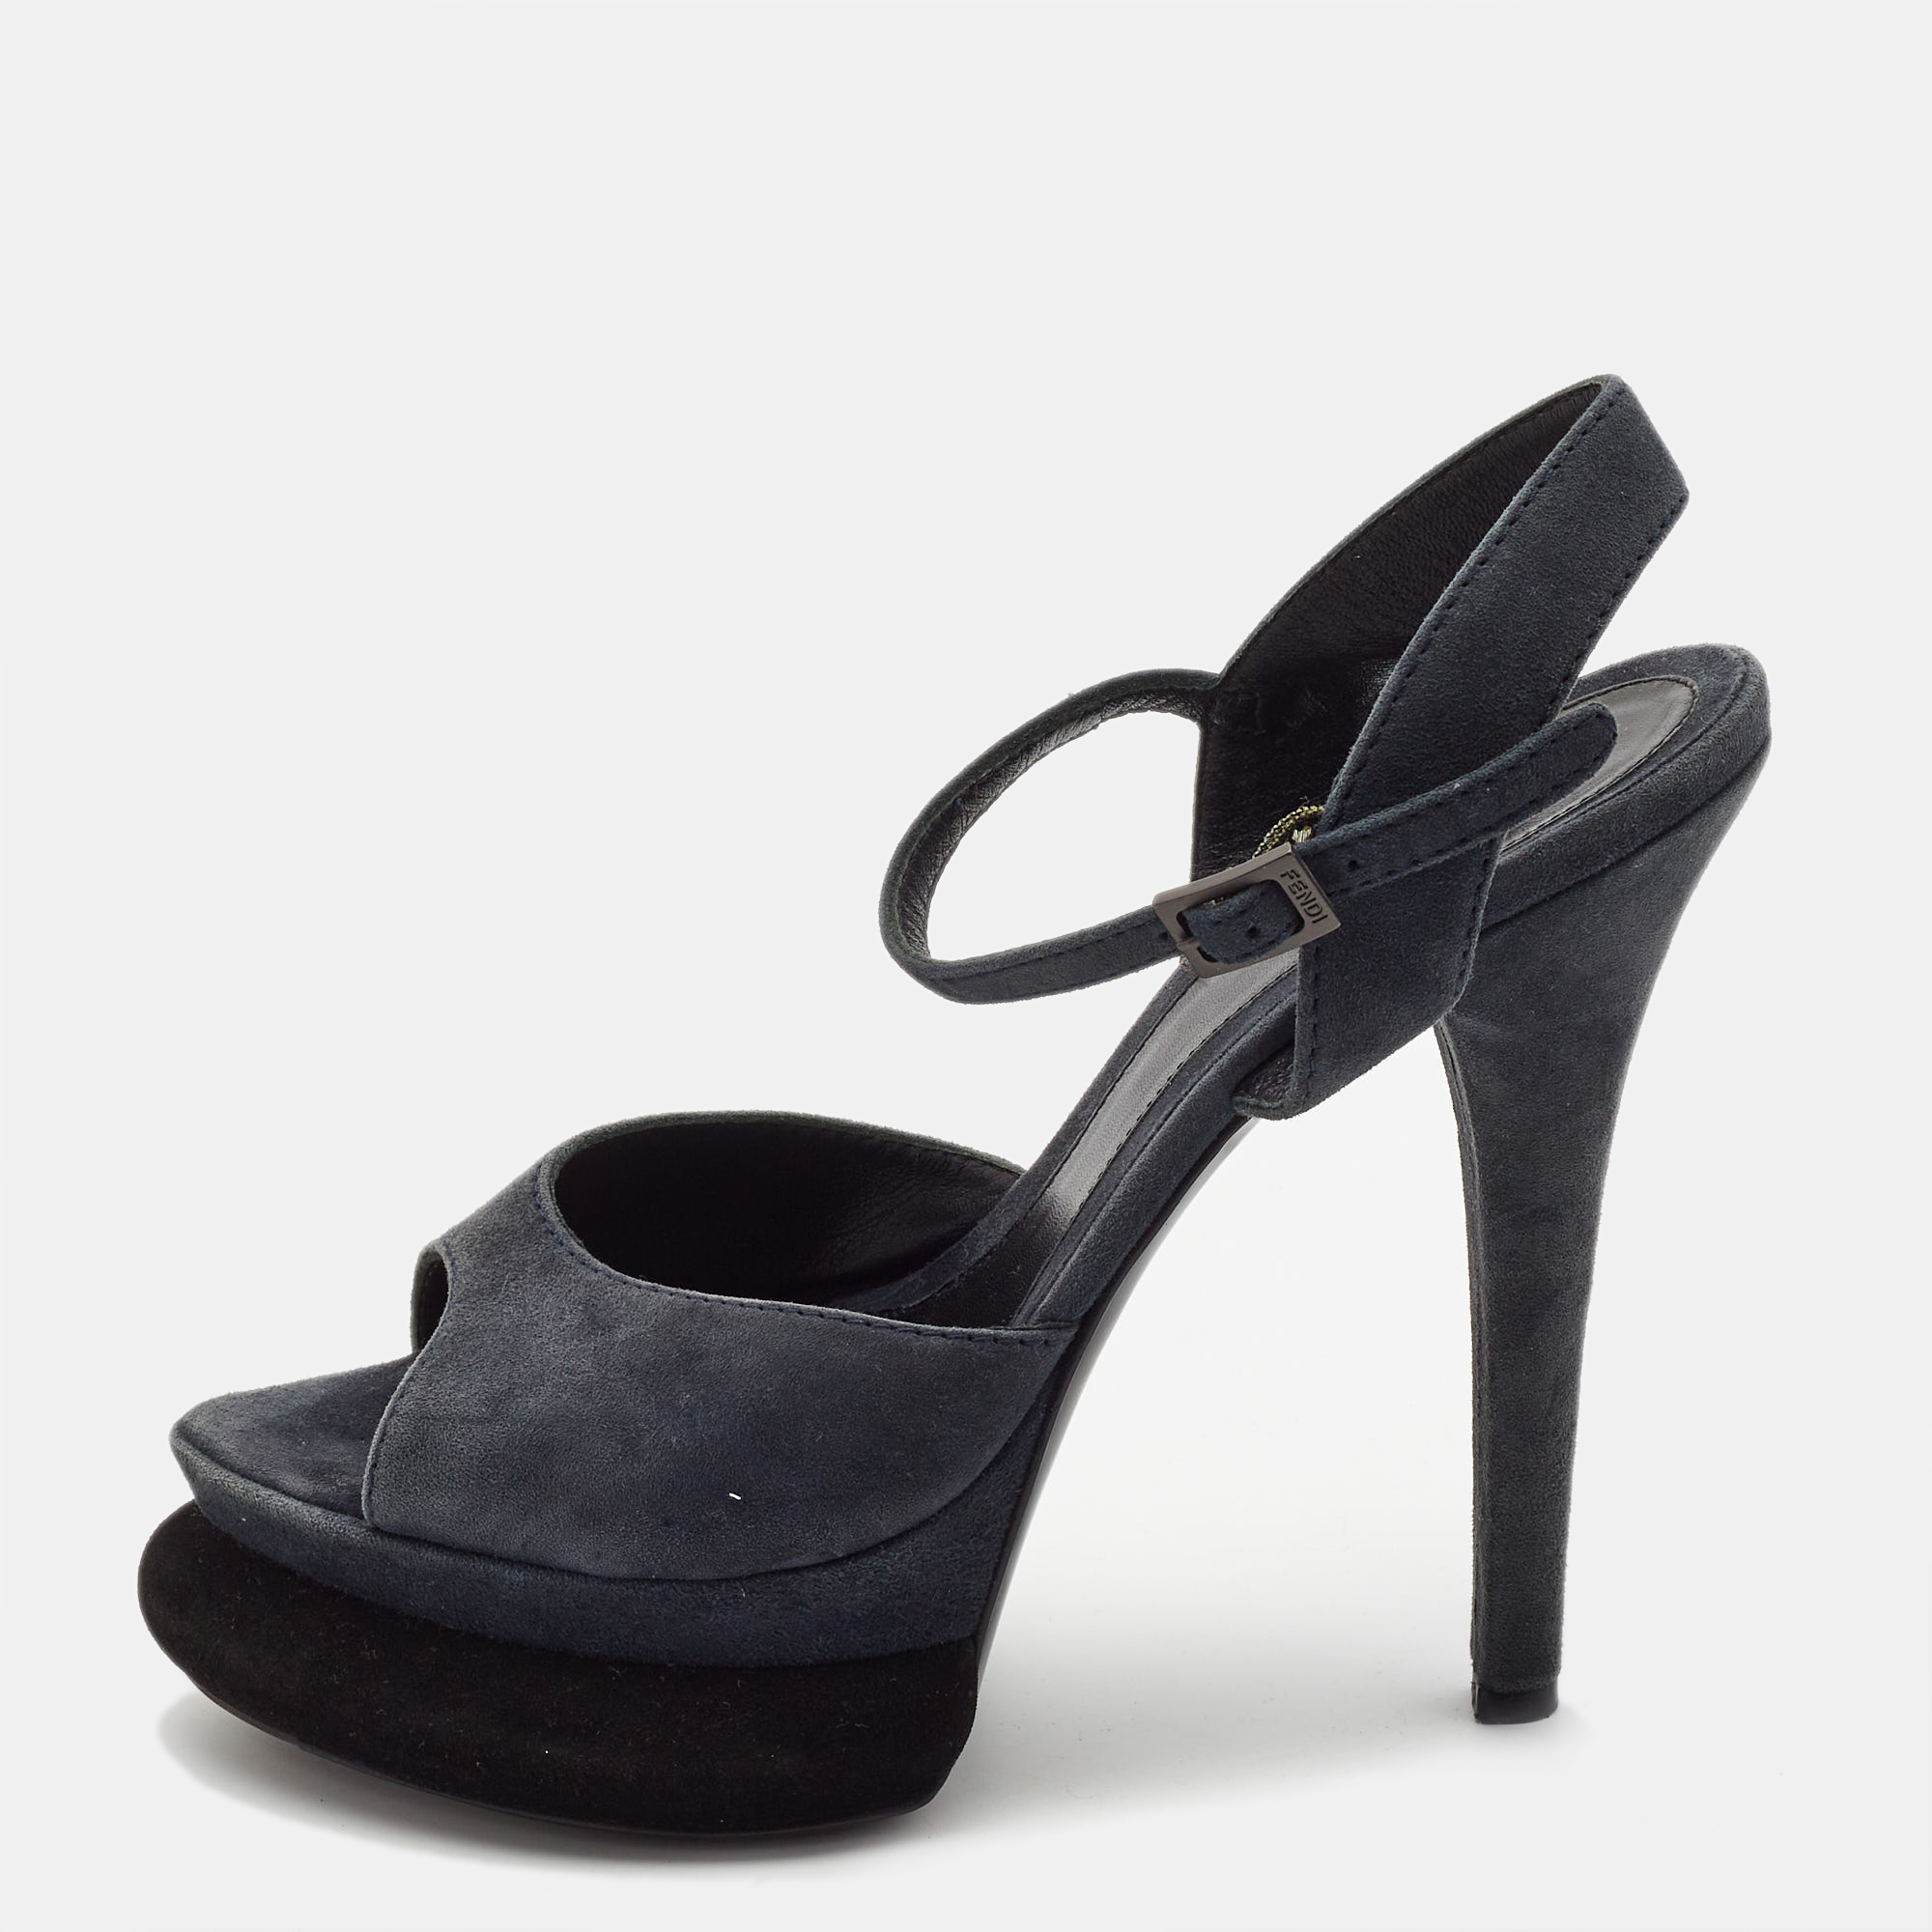 Fendi navy blue suede platform ankle strap sandals size 38